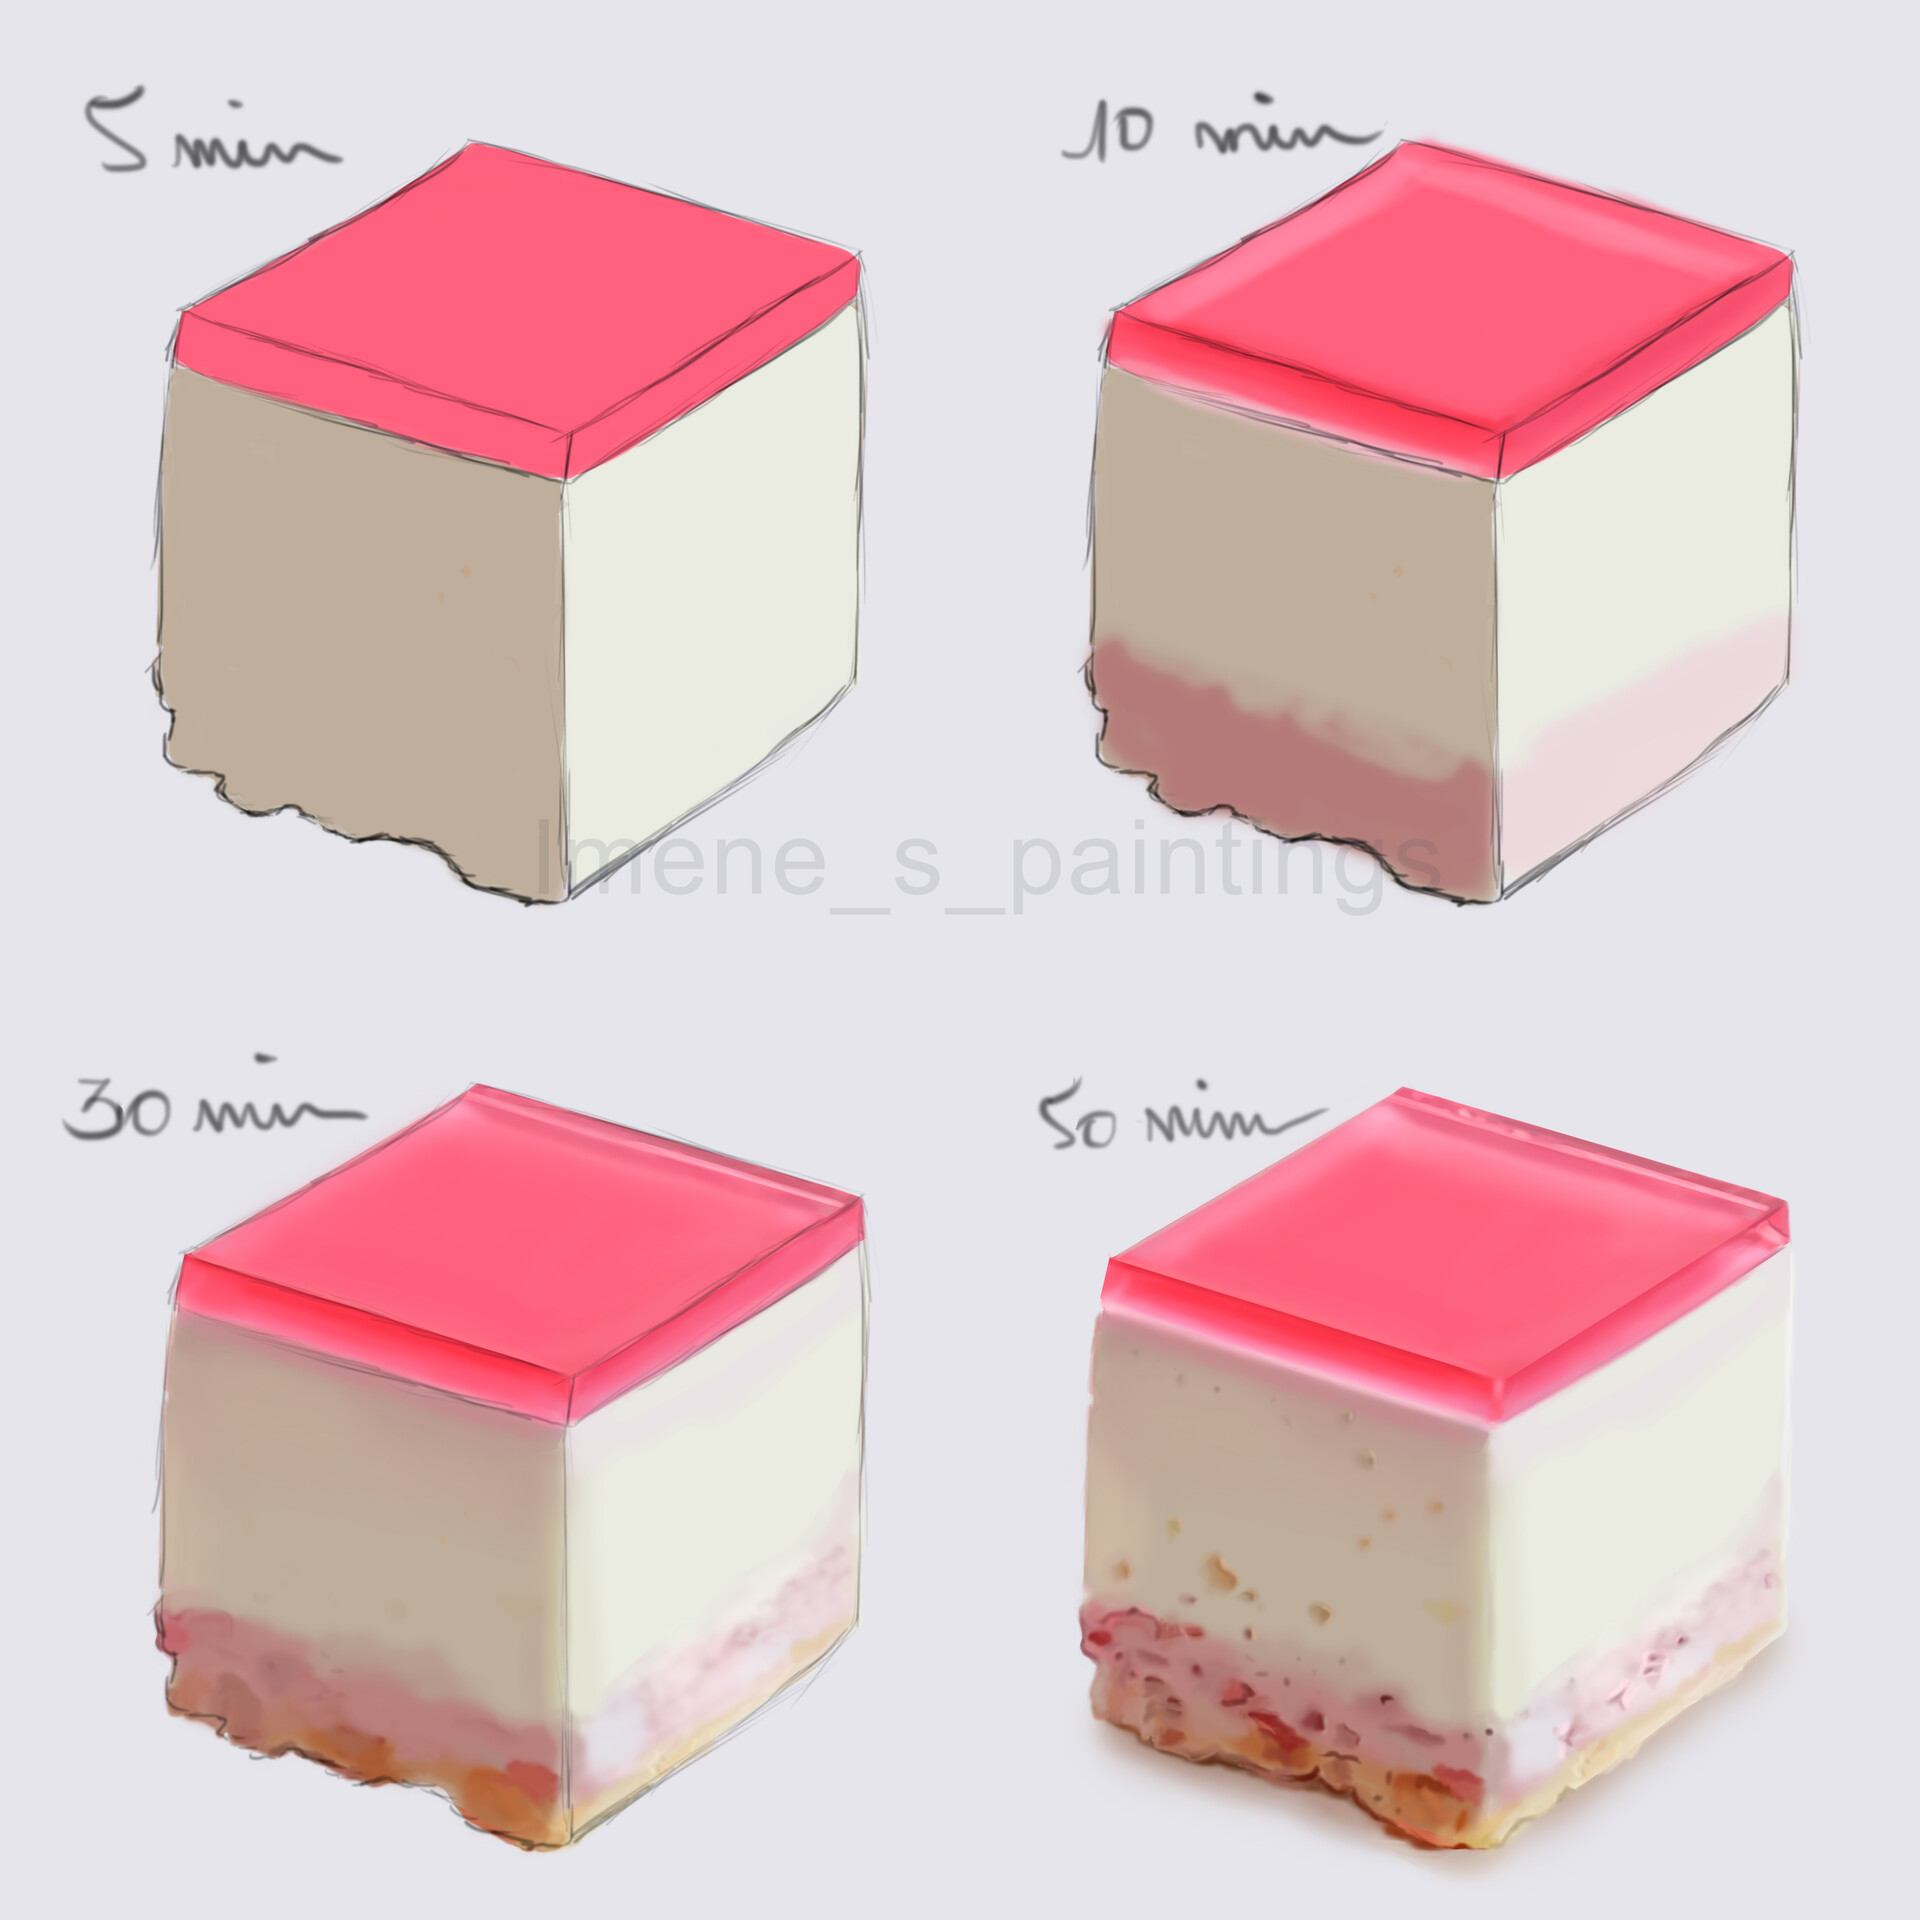 ArtStation - Jelly cheesecake